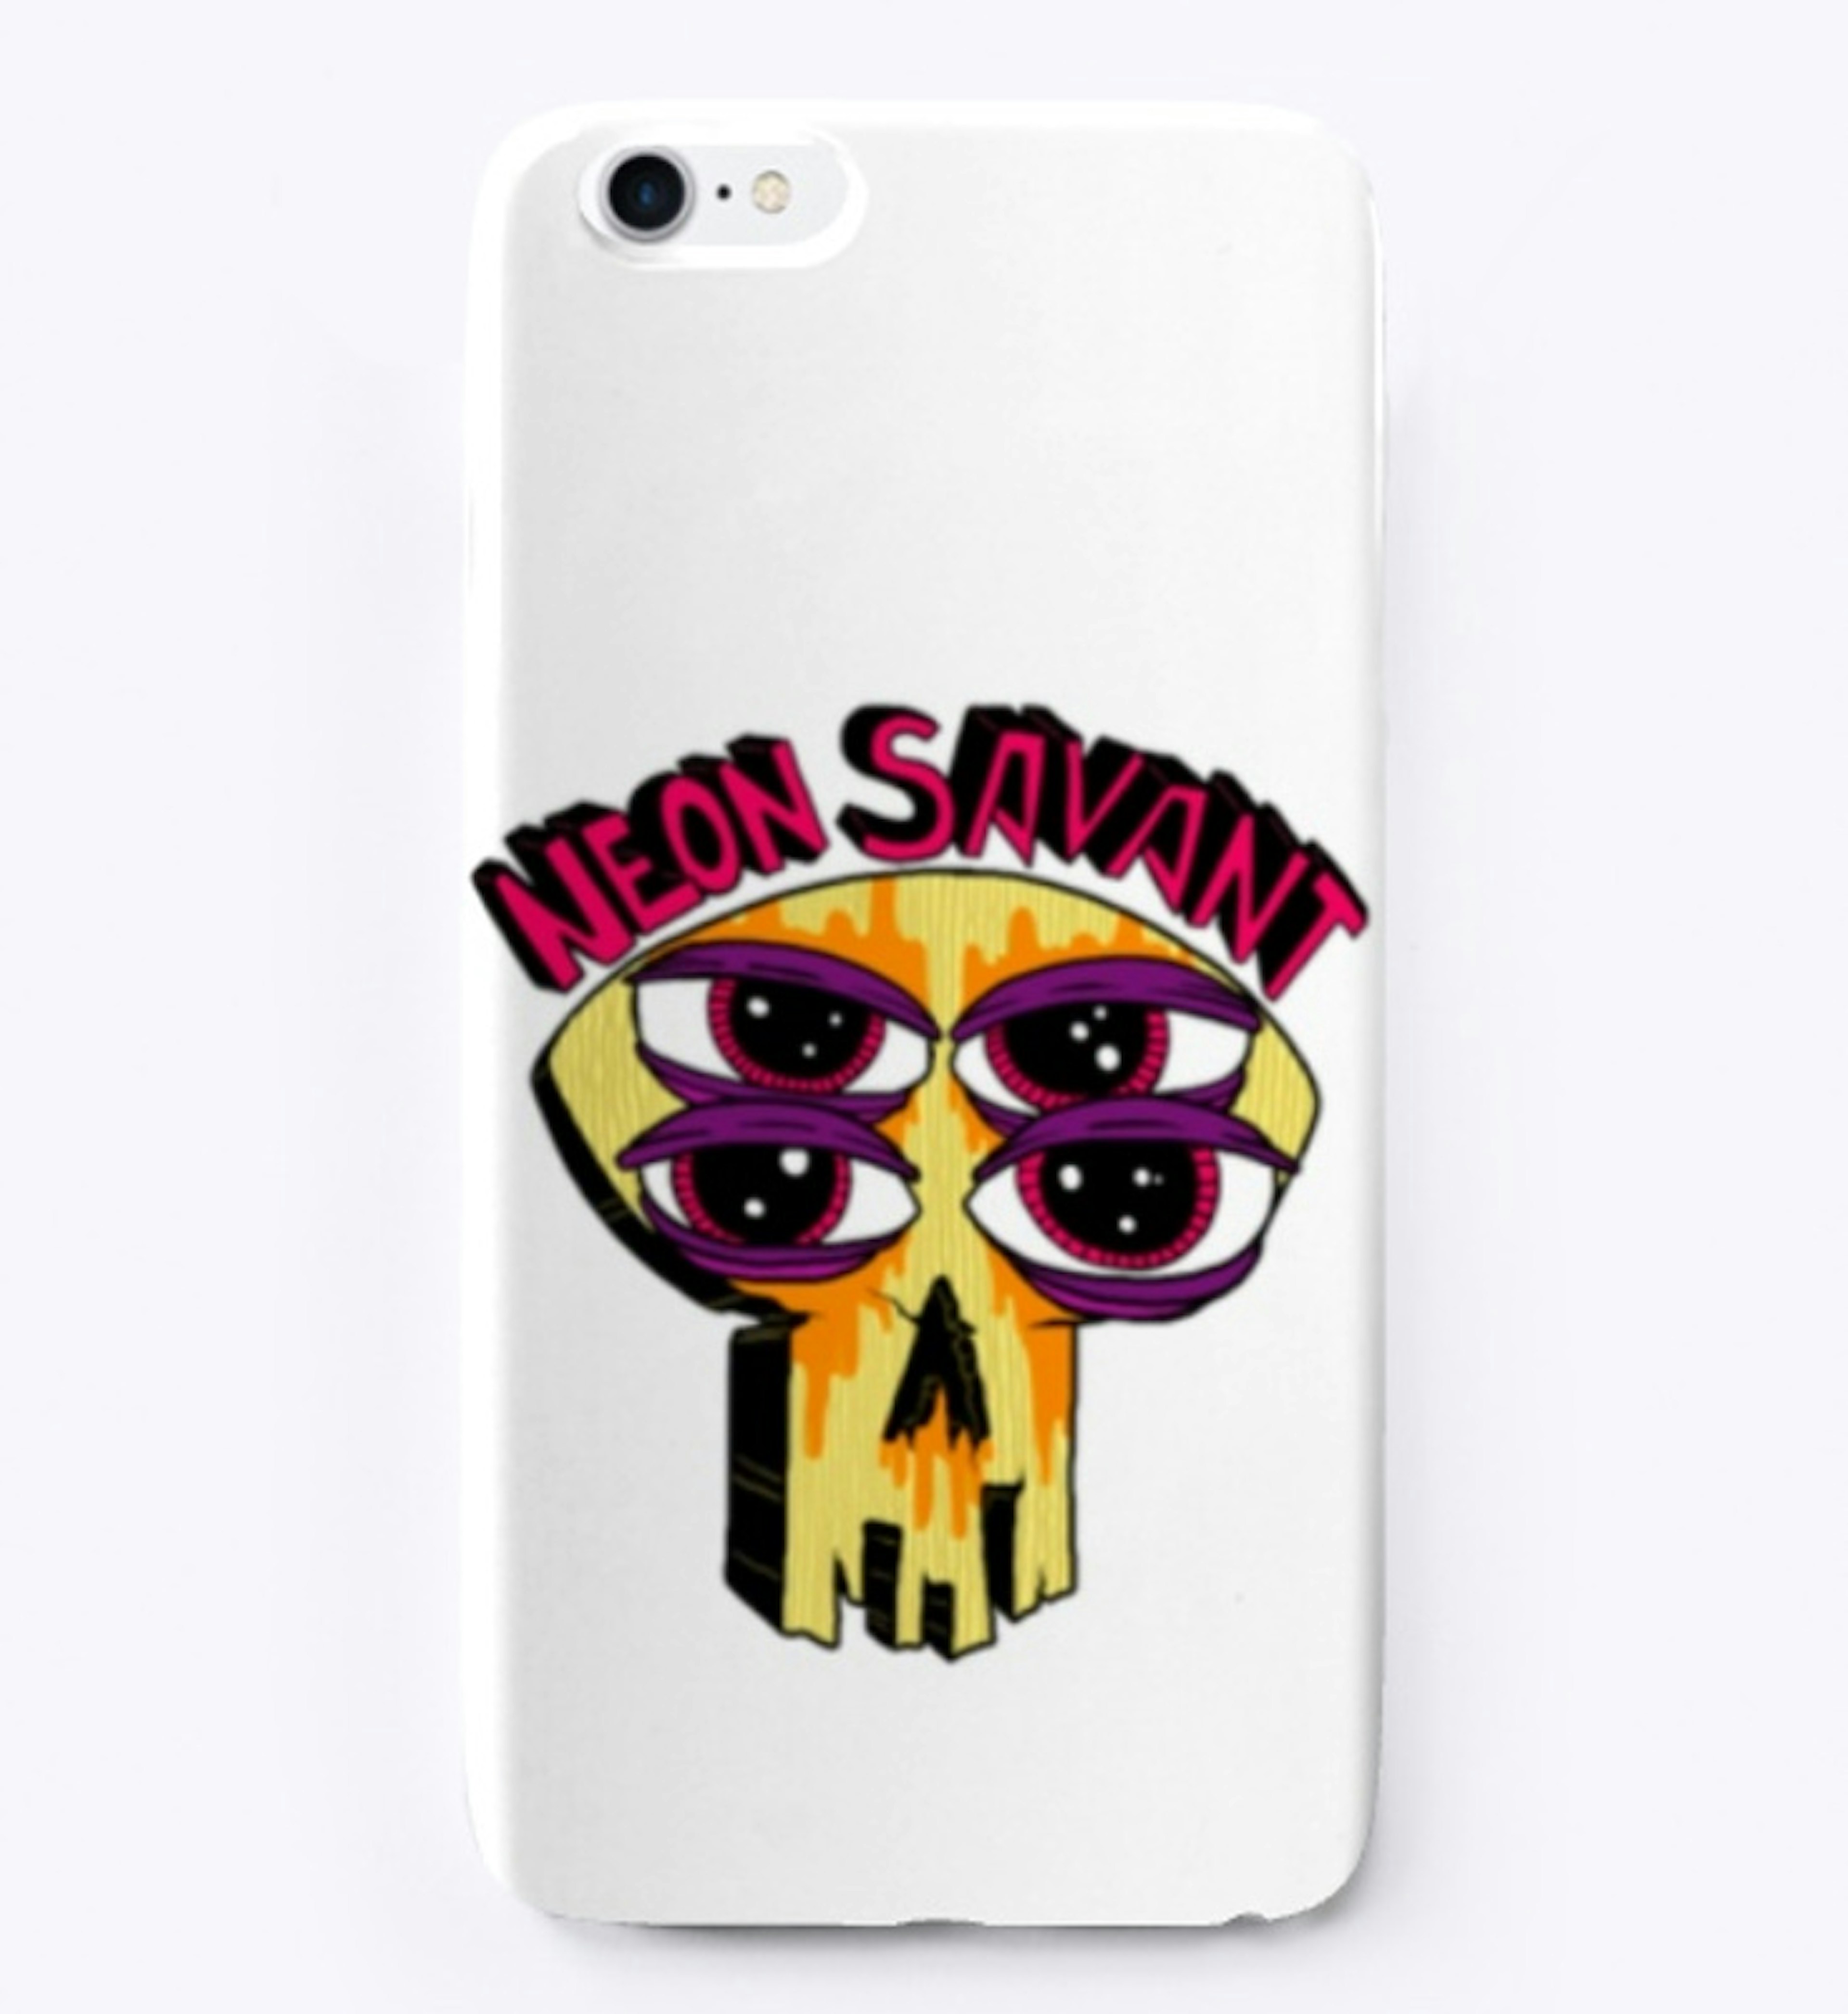 Neon Savant iPhone Case